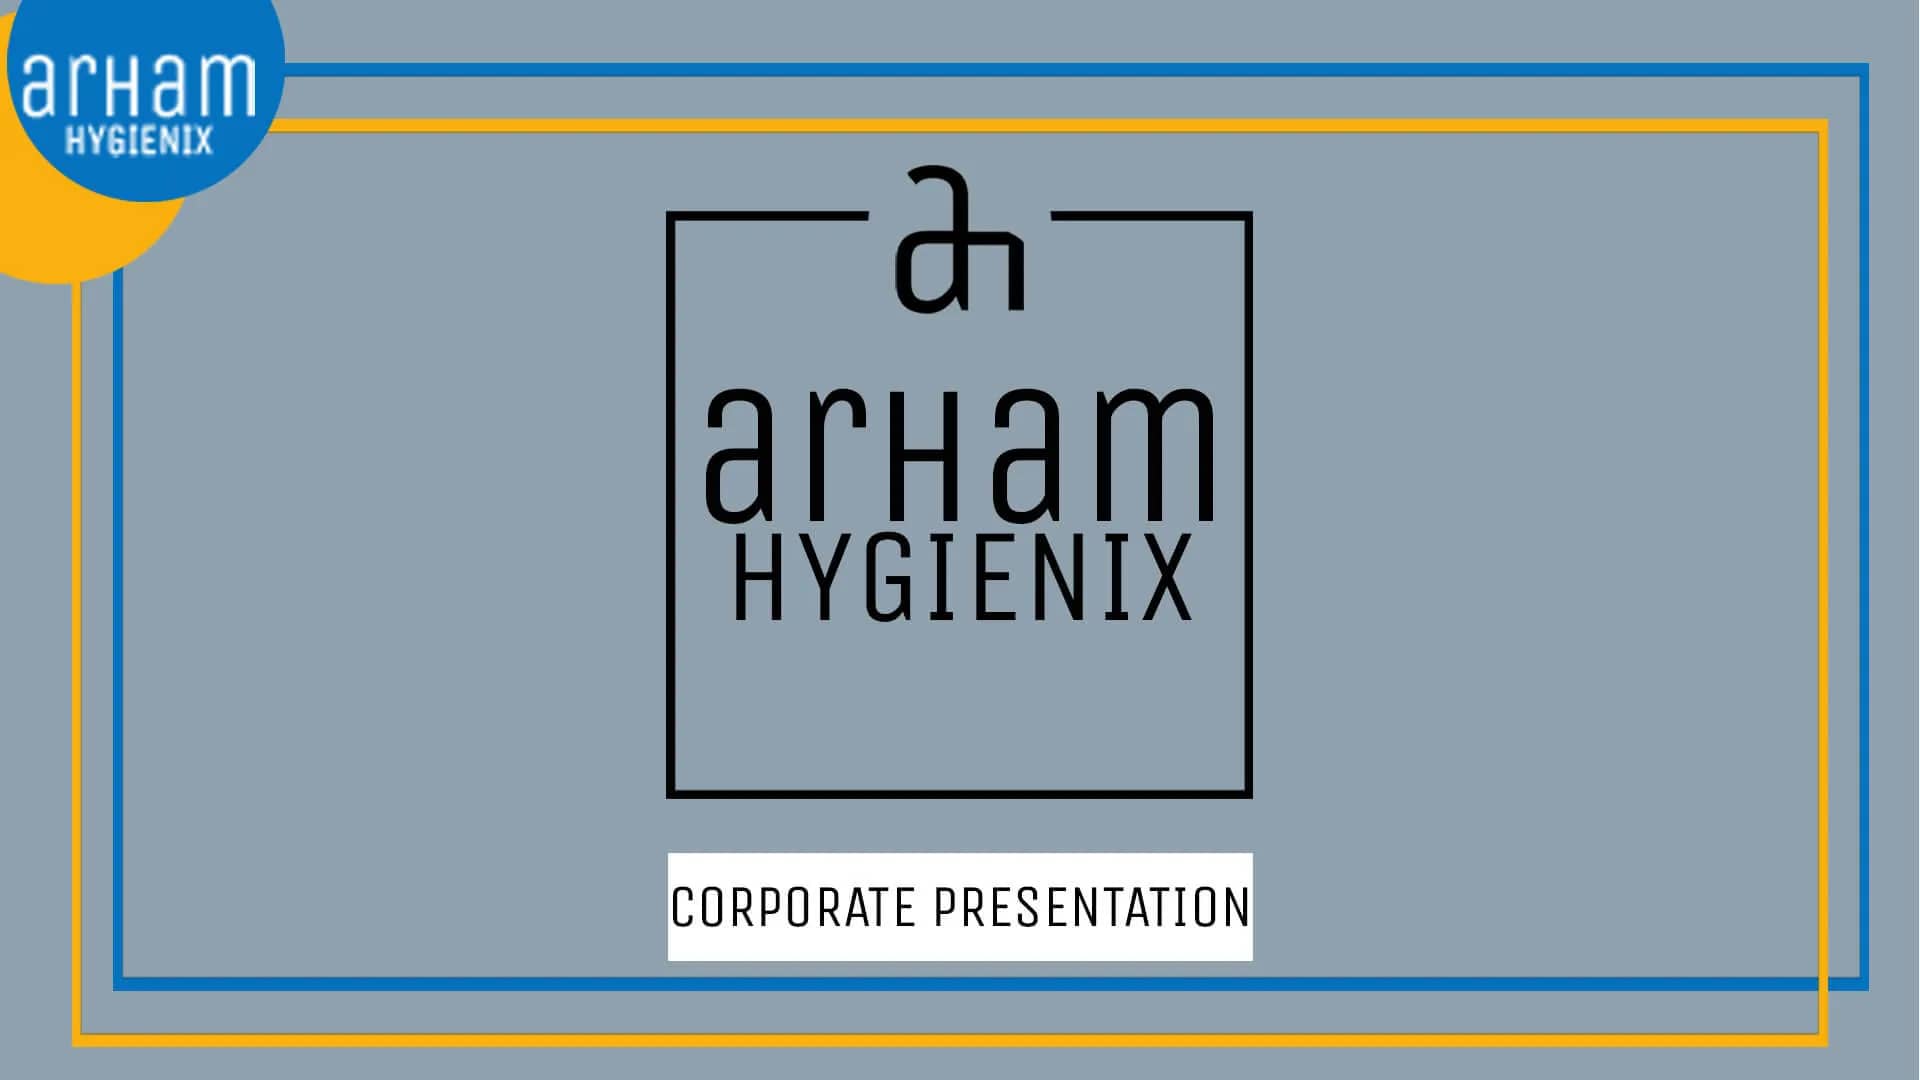 Arham Hygienix – Corporate Presentation